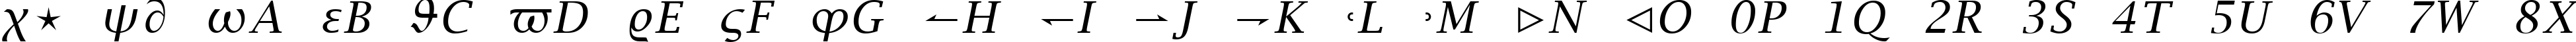 Пример написания английского алфавита шрифтом Lucida Bright Math Italic